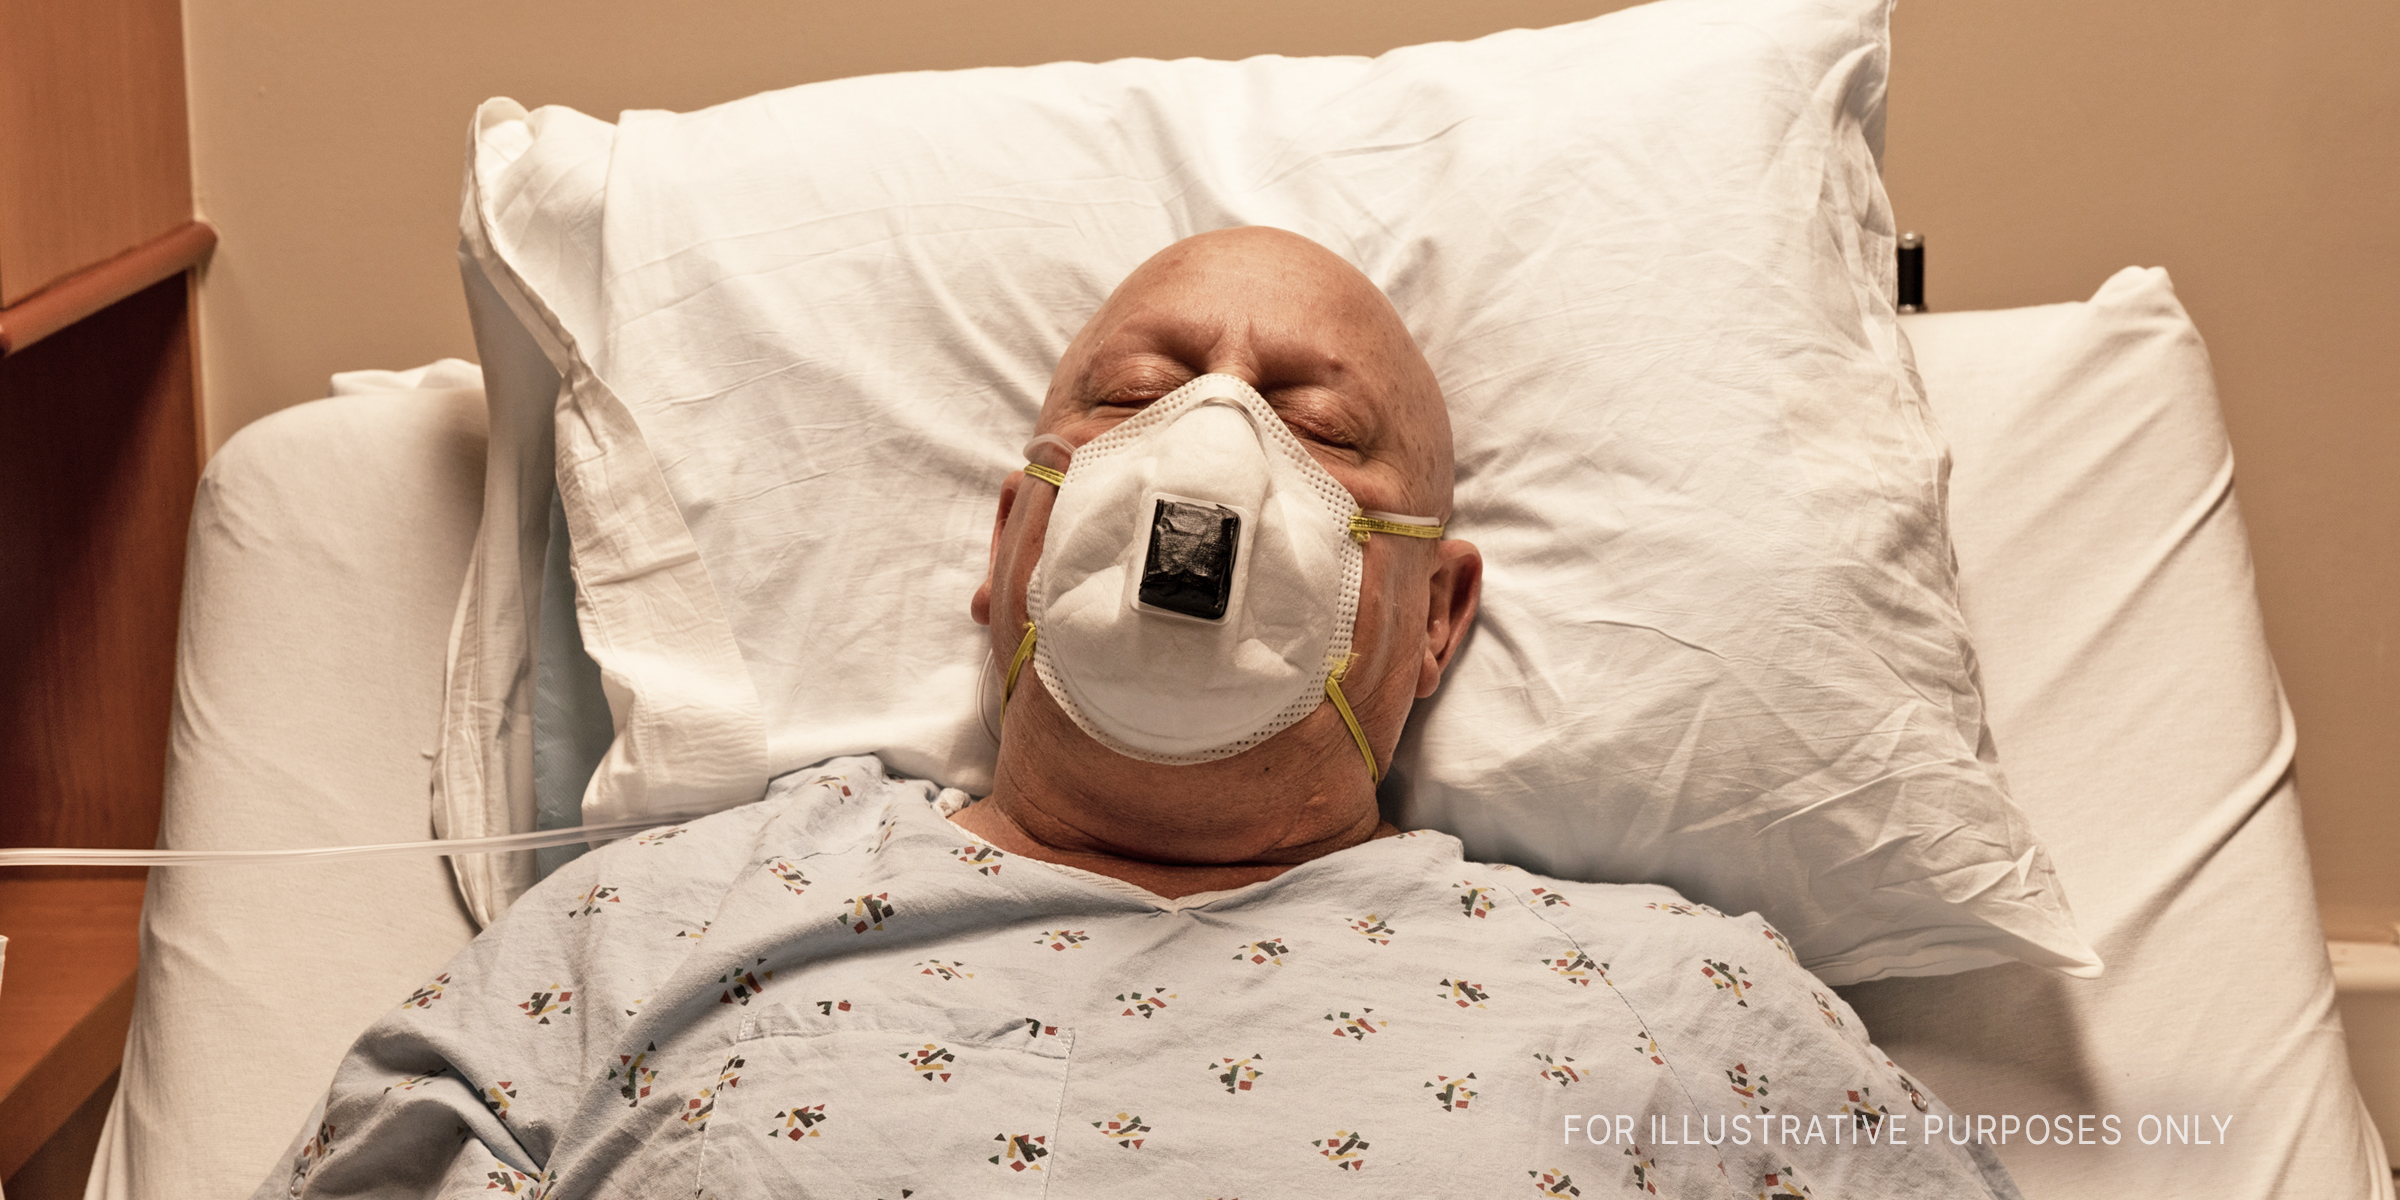 Man sleeps with respirator. | Source: Shutterstock